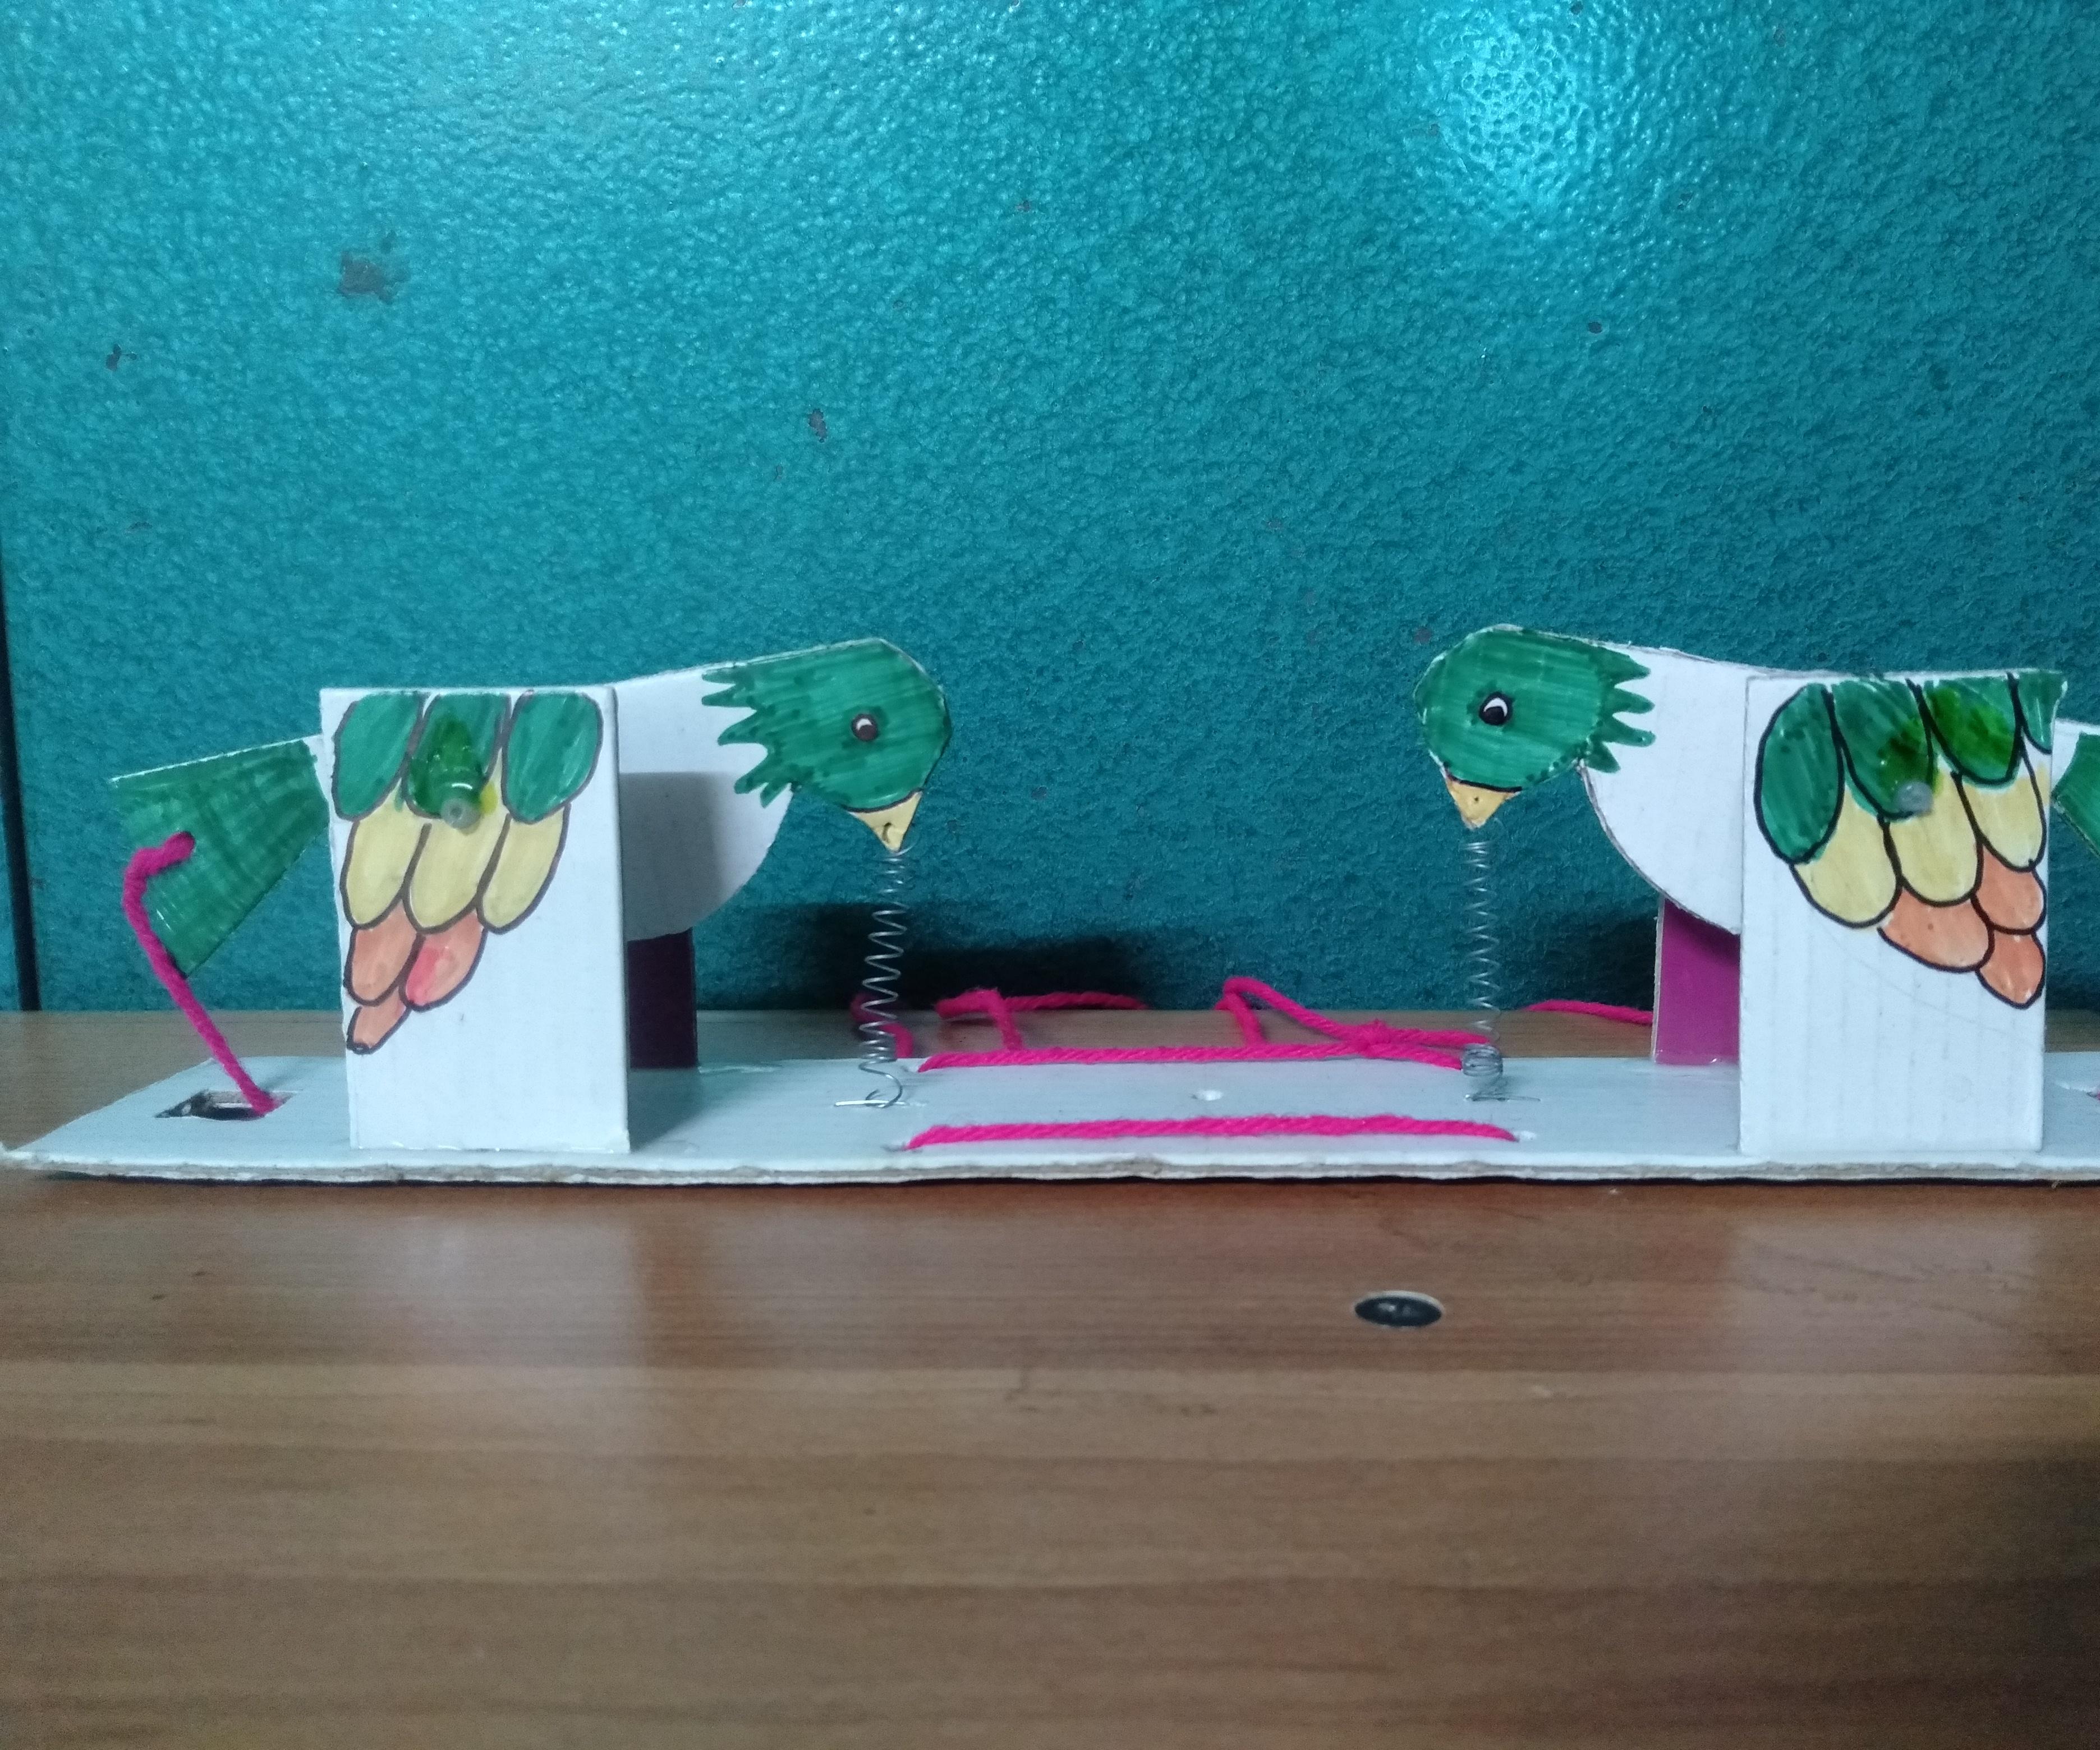 Decorative Birds Hanging Made by Cardboard Sheet